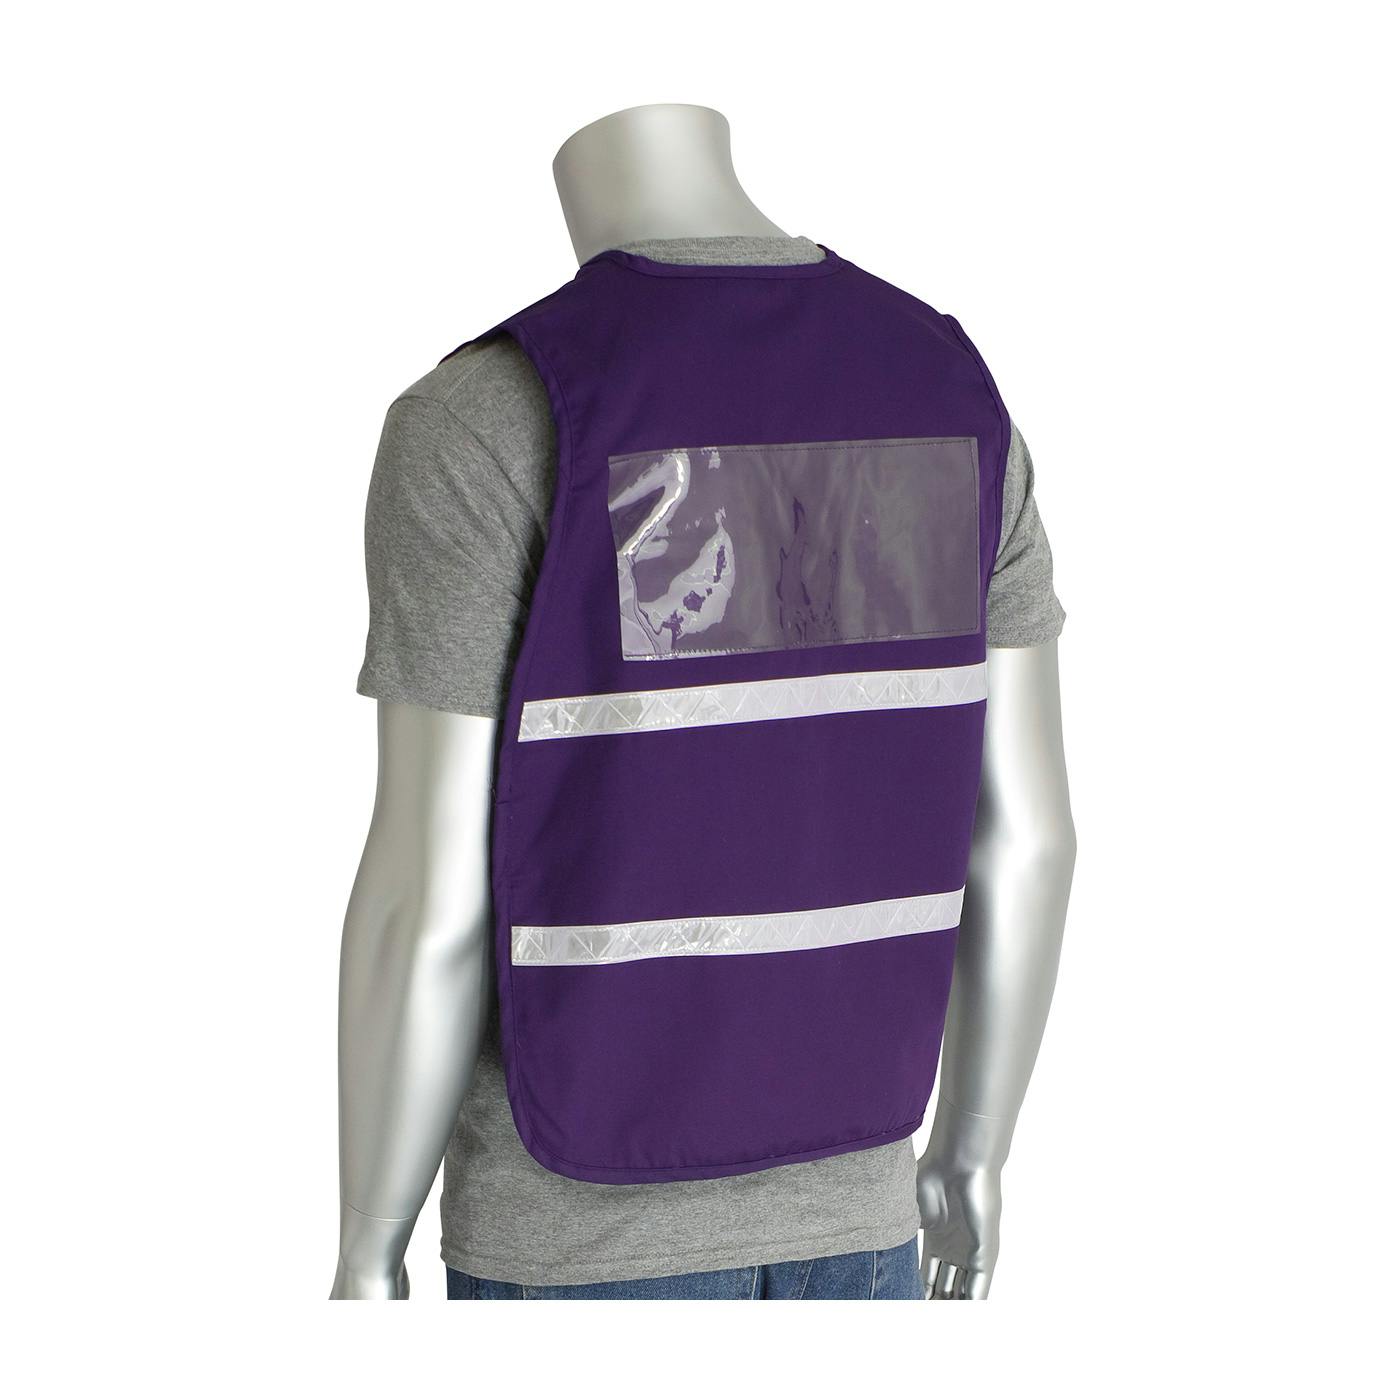 Non-ANSI Incident Command Vest - Cotton/Polyester Blend, Purple (300-2501)